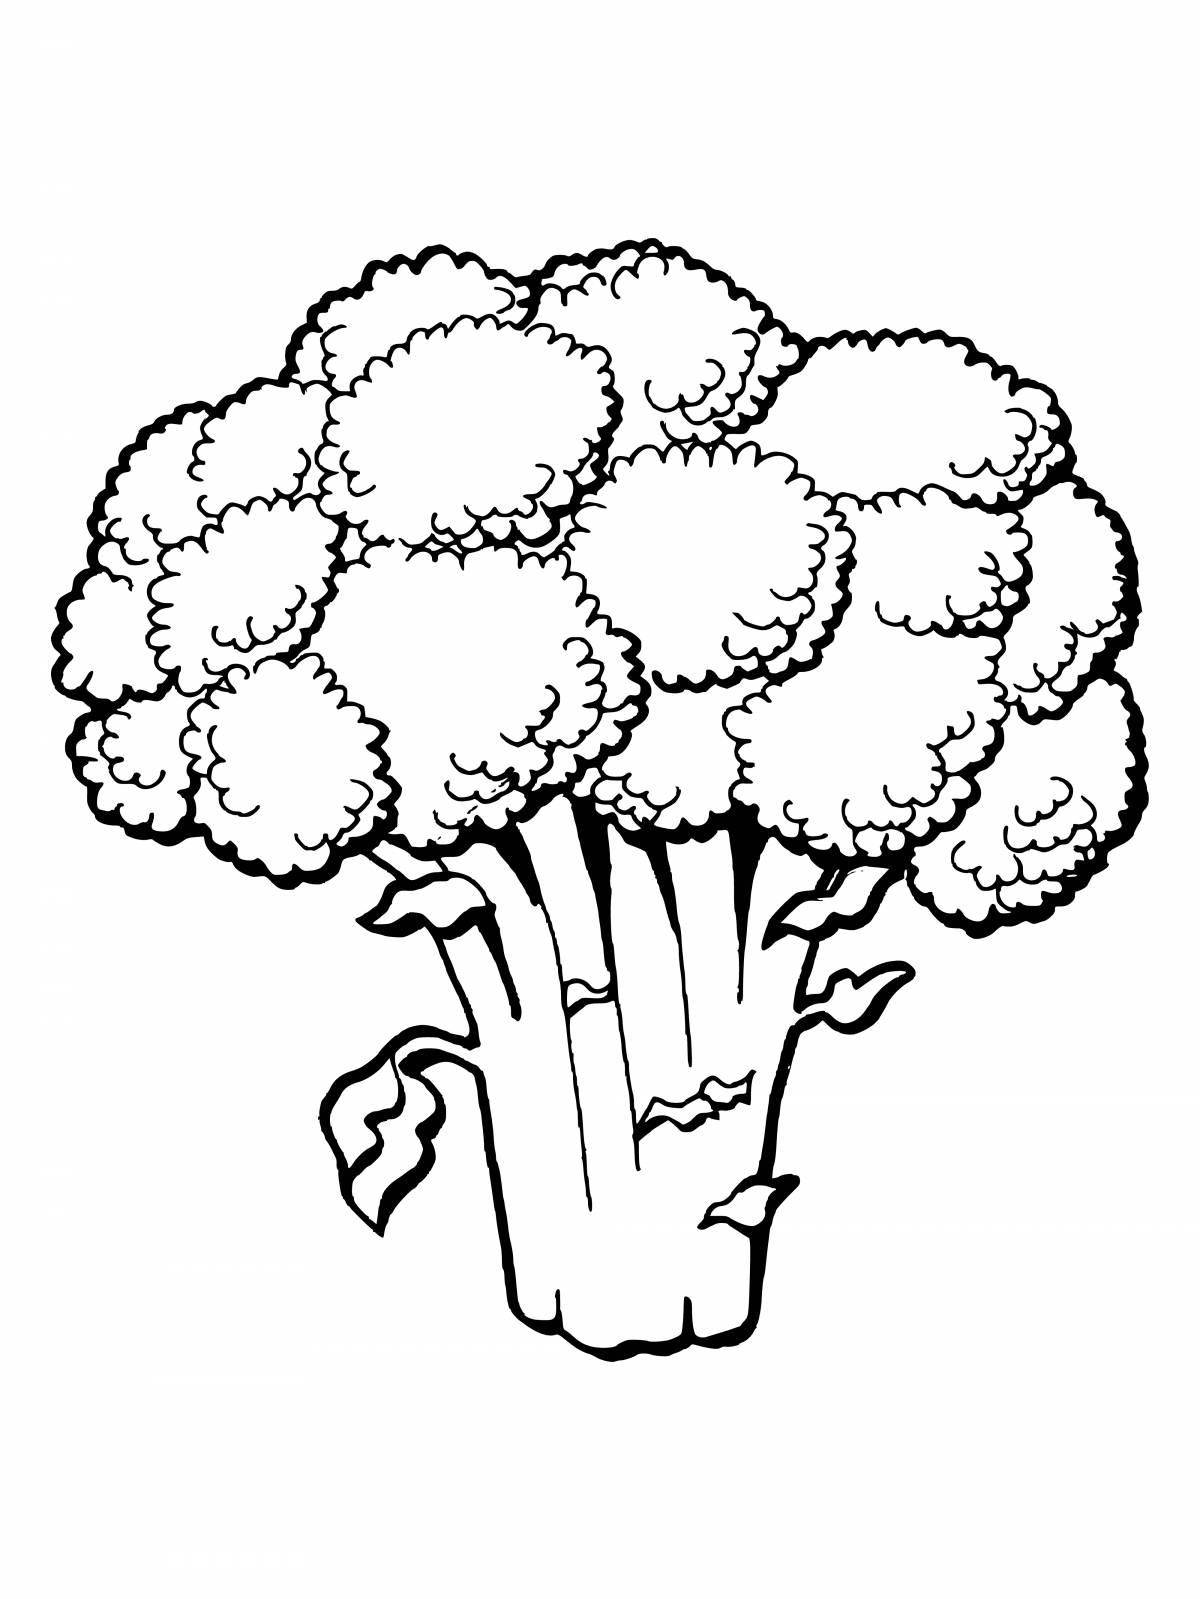 Creative broccoli coloring